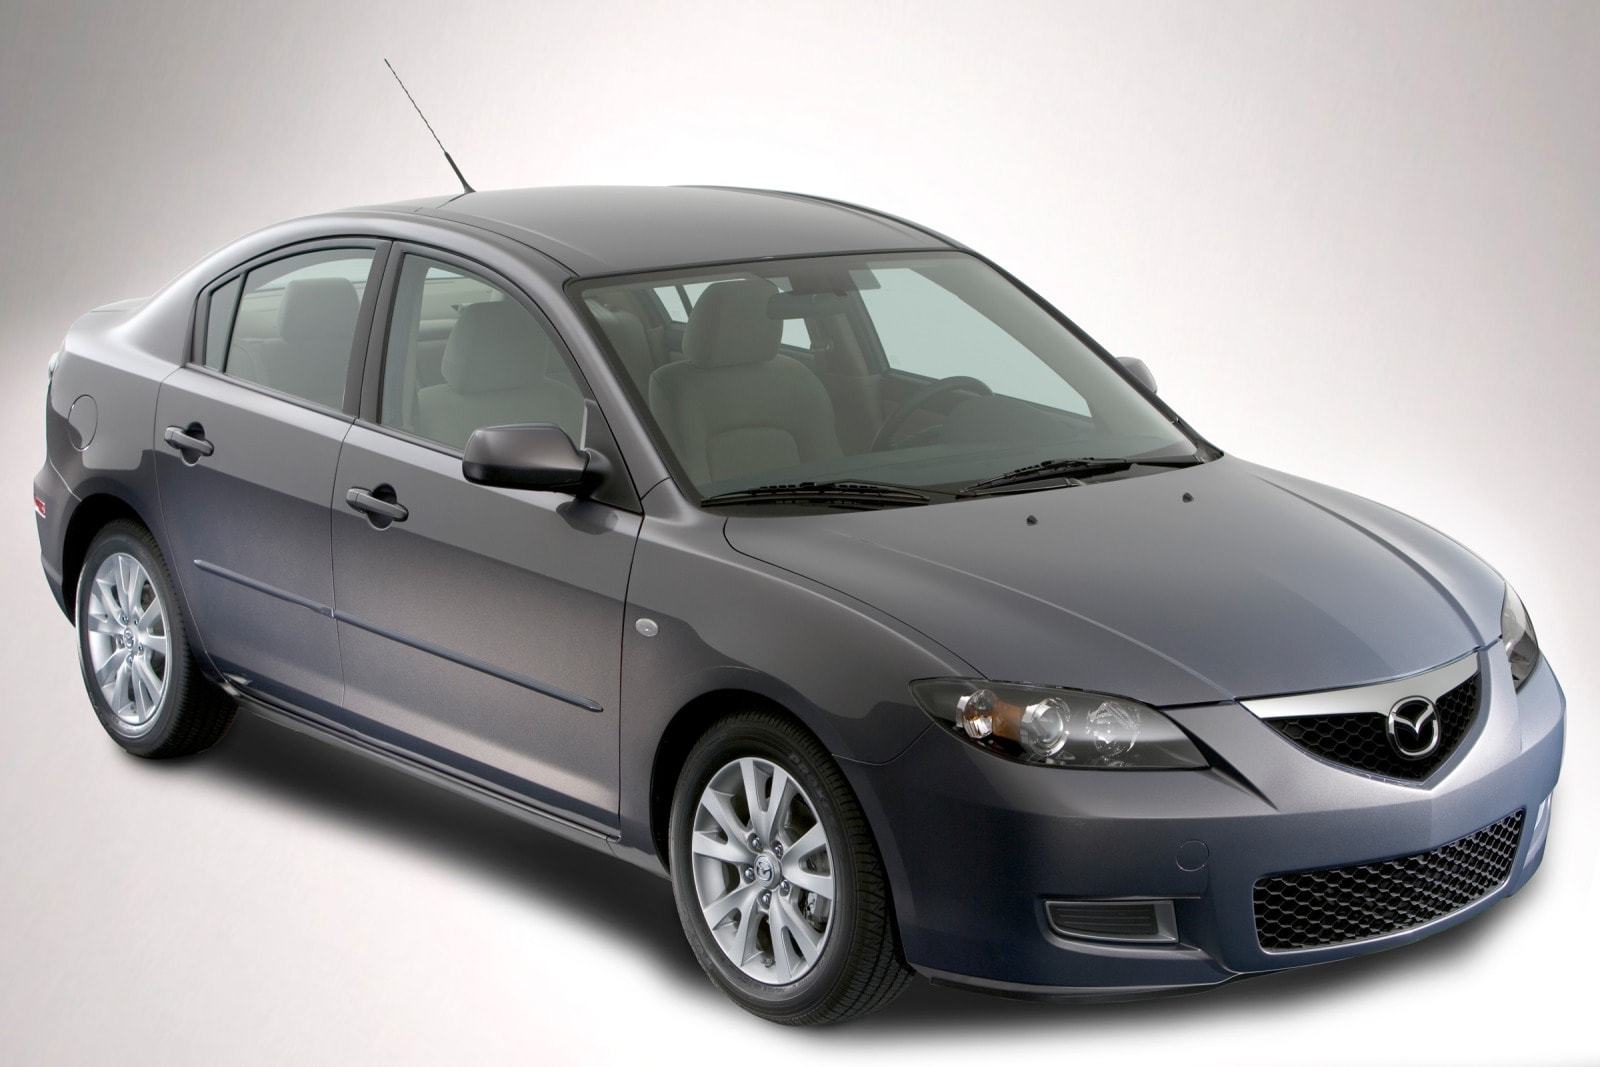 2007 Mazda 3 Review & Ratings | Edmunds